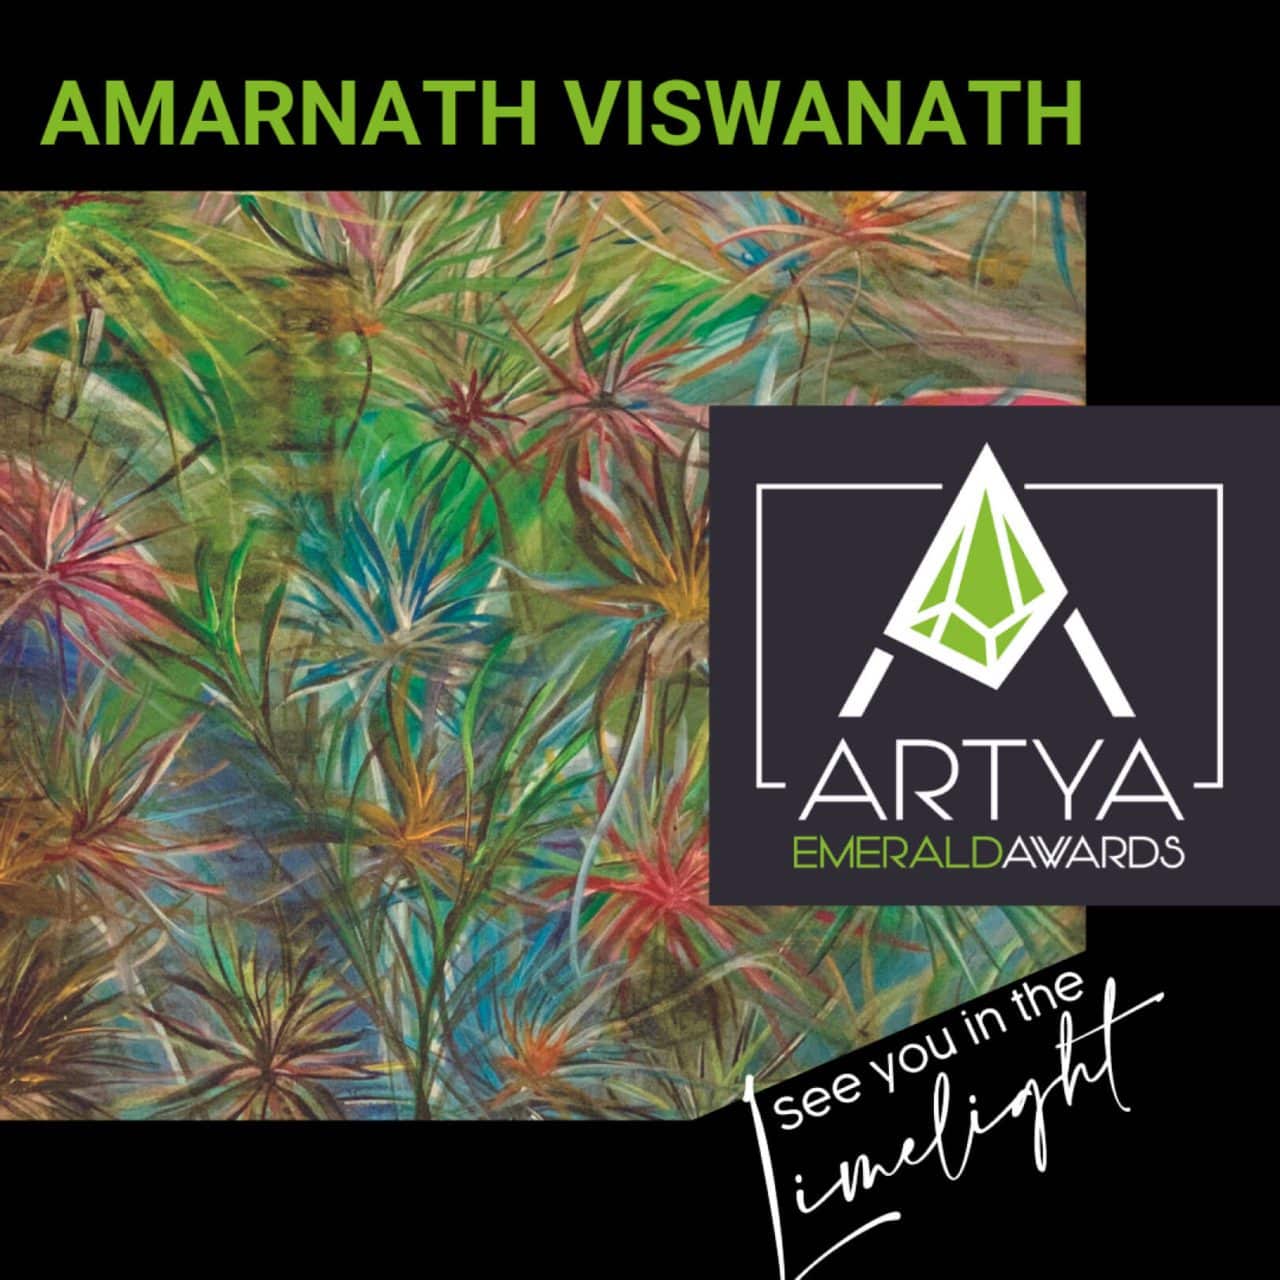 Amarnath Viswanath